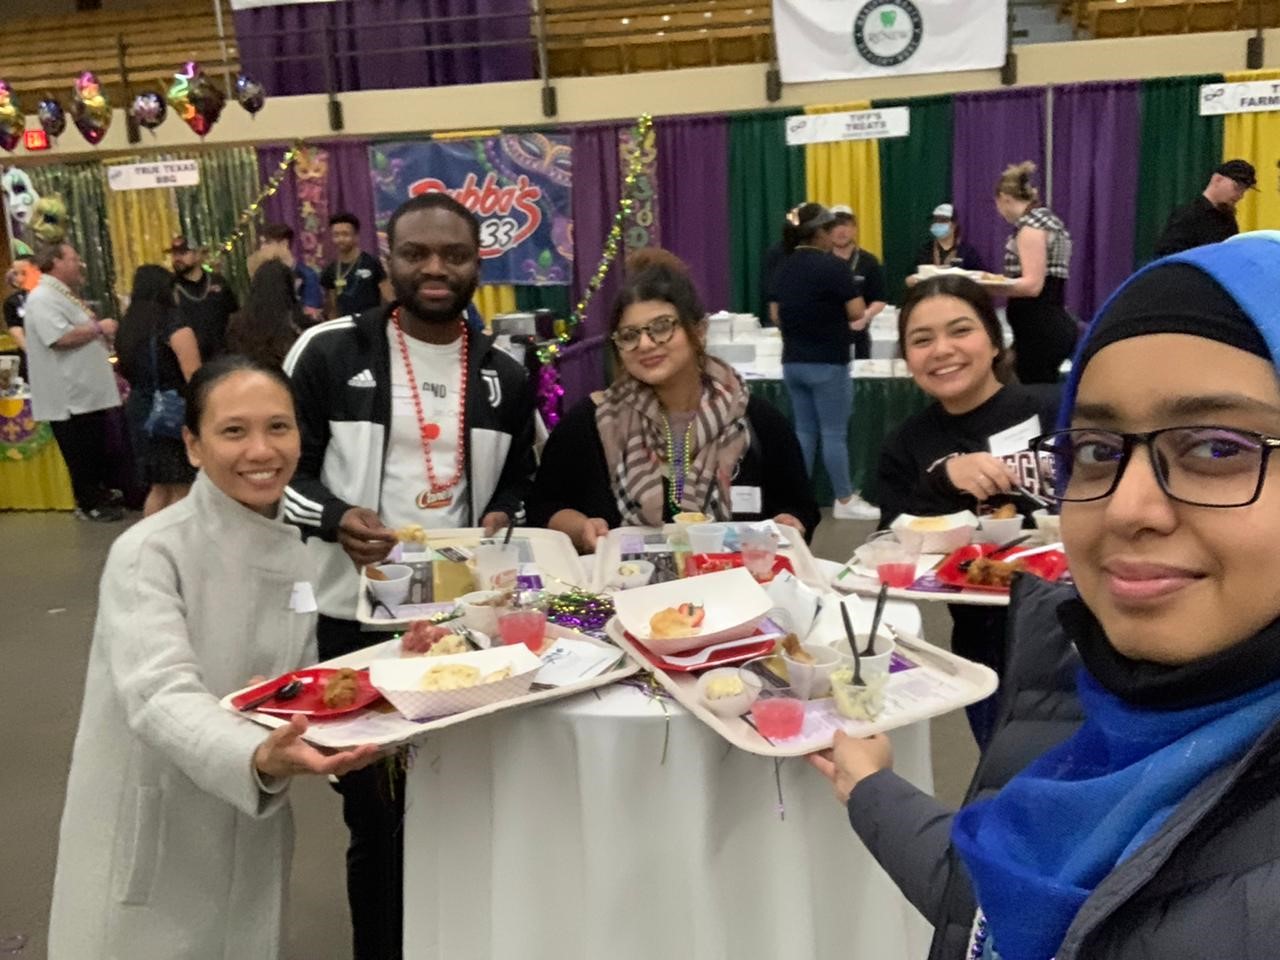  Lubbock Meals on Wheels Mardi Gras Fundraising Event